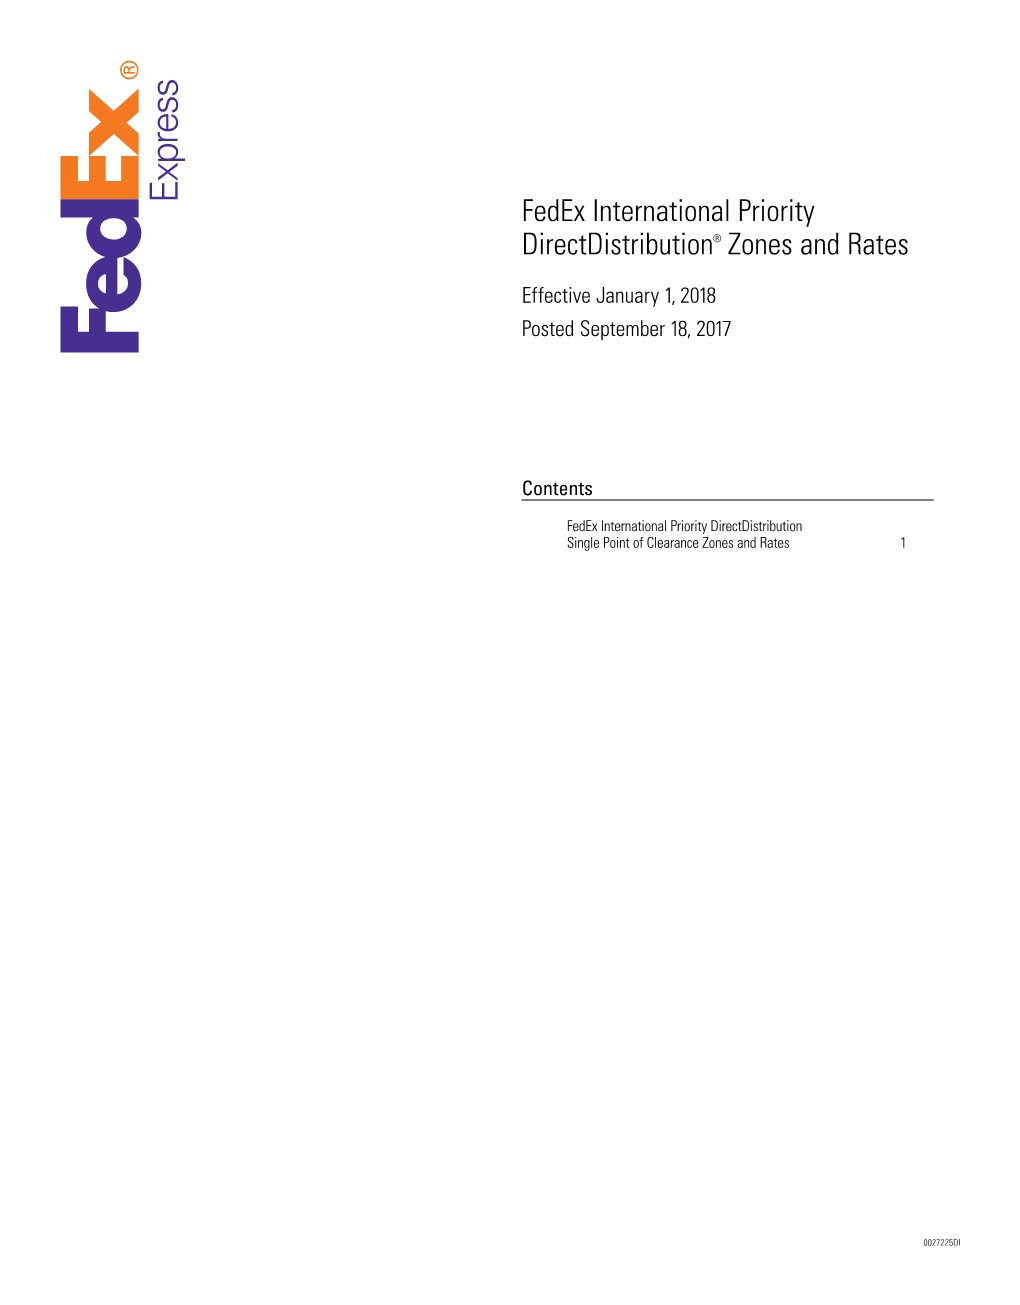 Fedex International Priority Directdistribution® Zones and Rates